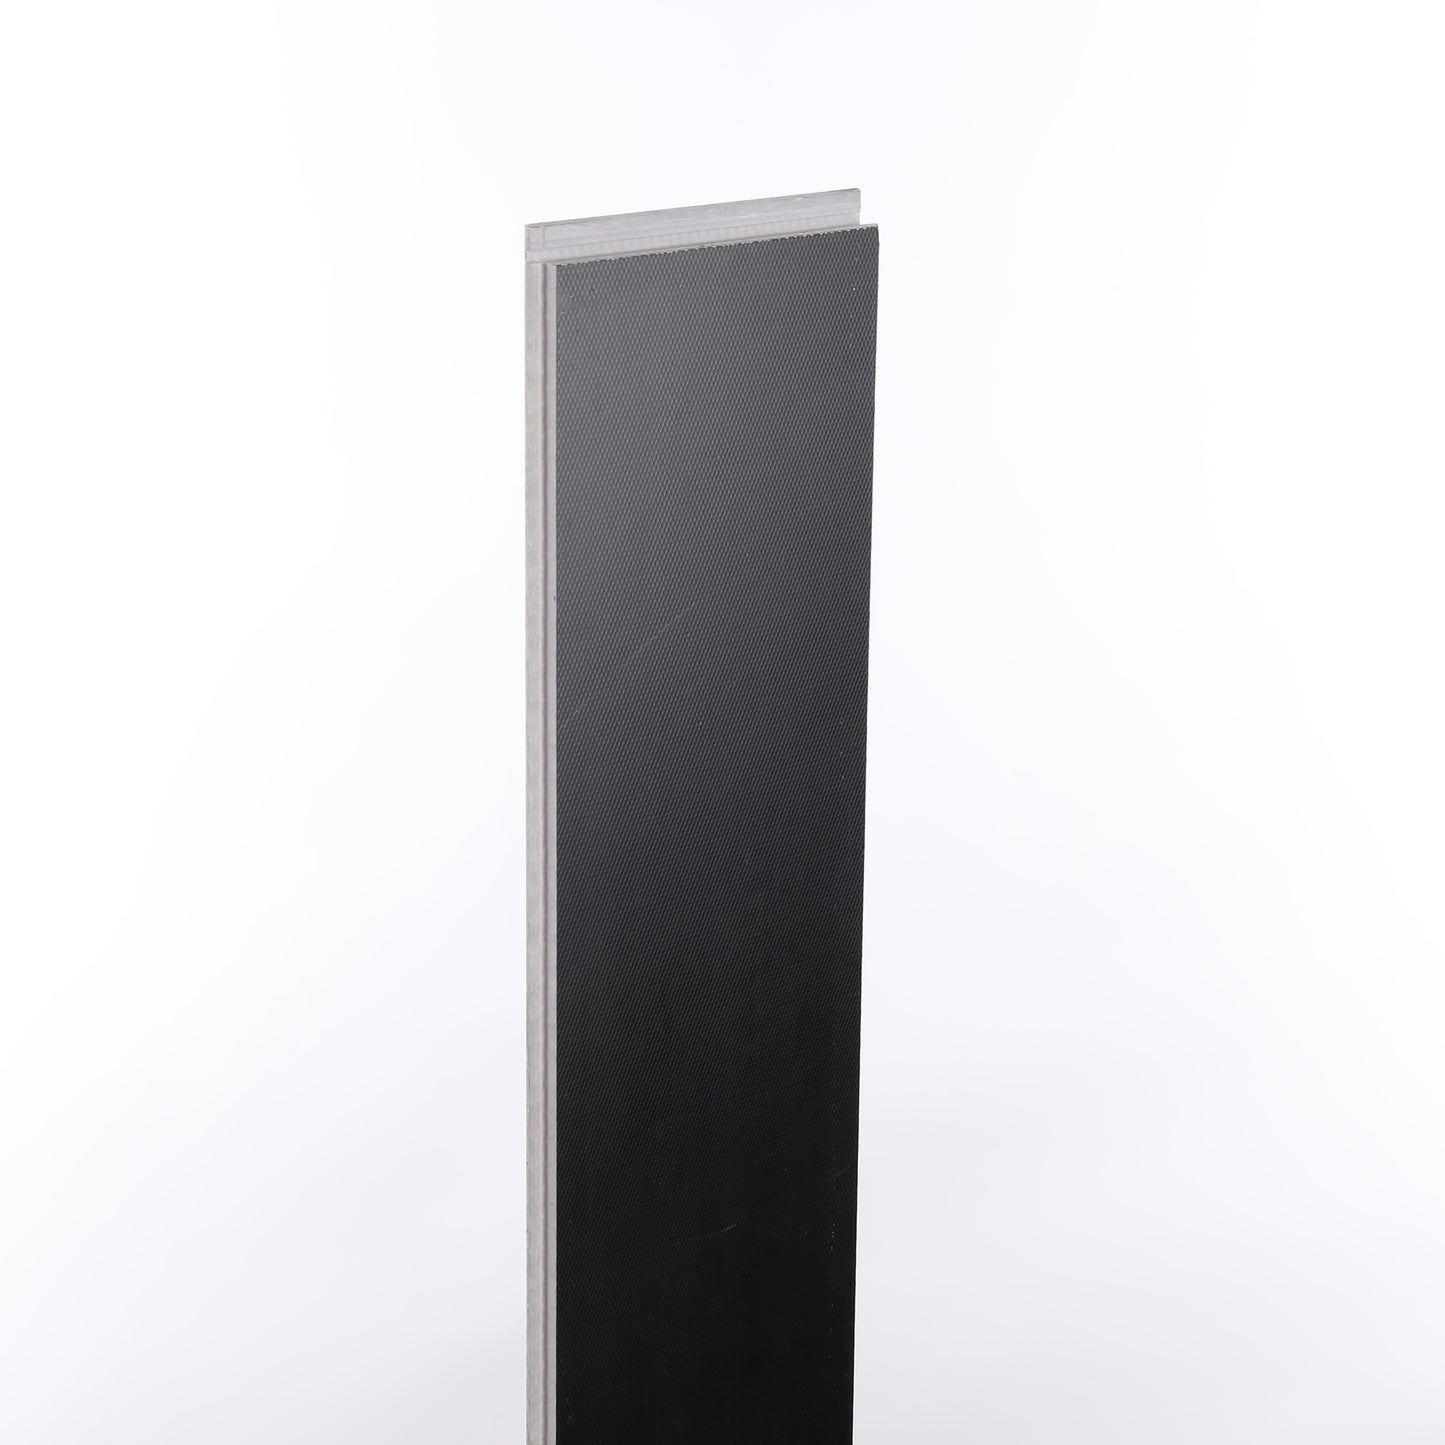 7mm Winter Sky Waterproof Engineered Strand Bamboo Flooring 5.12 in. Wide x 36.22 in. Long